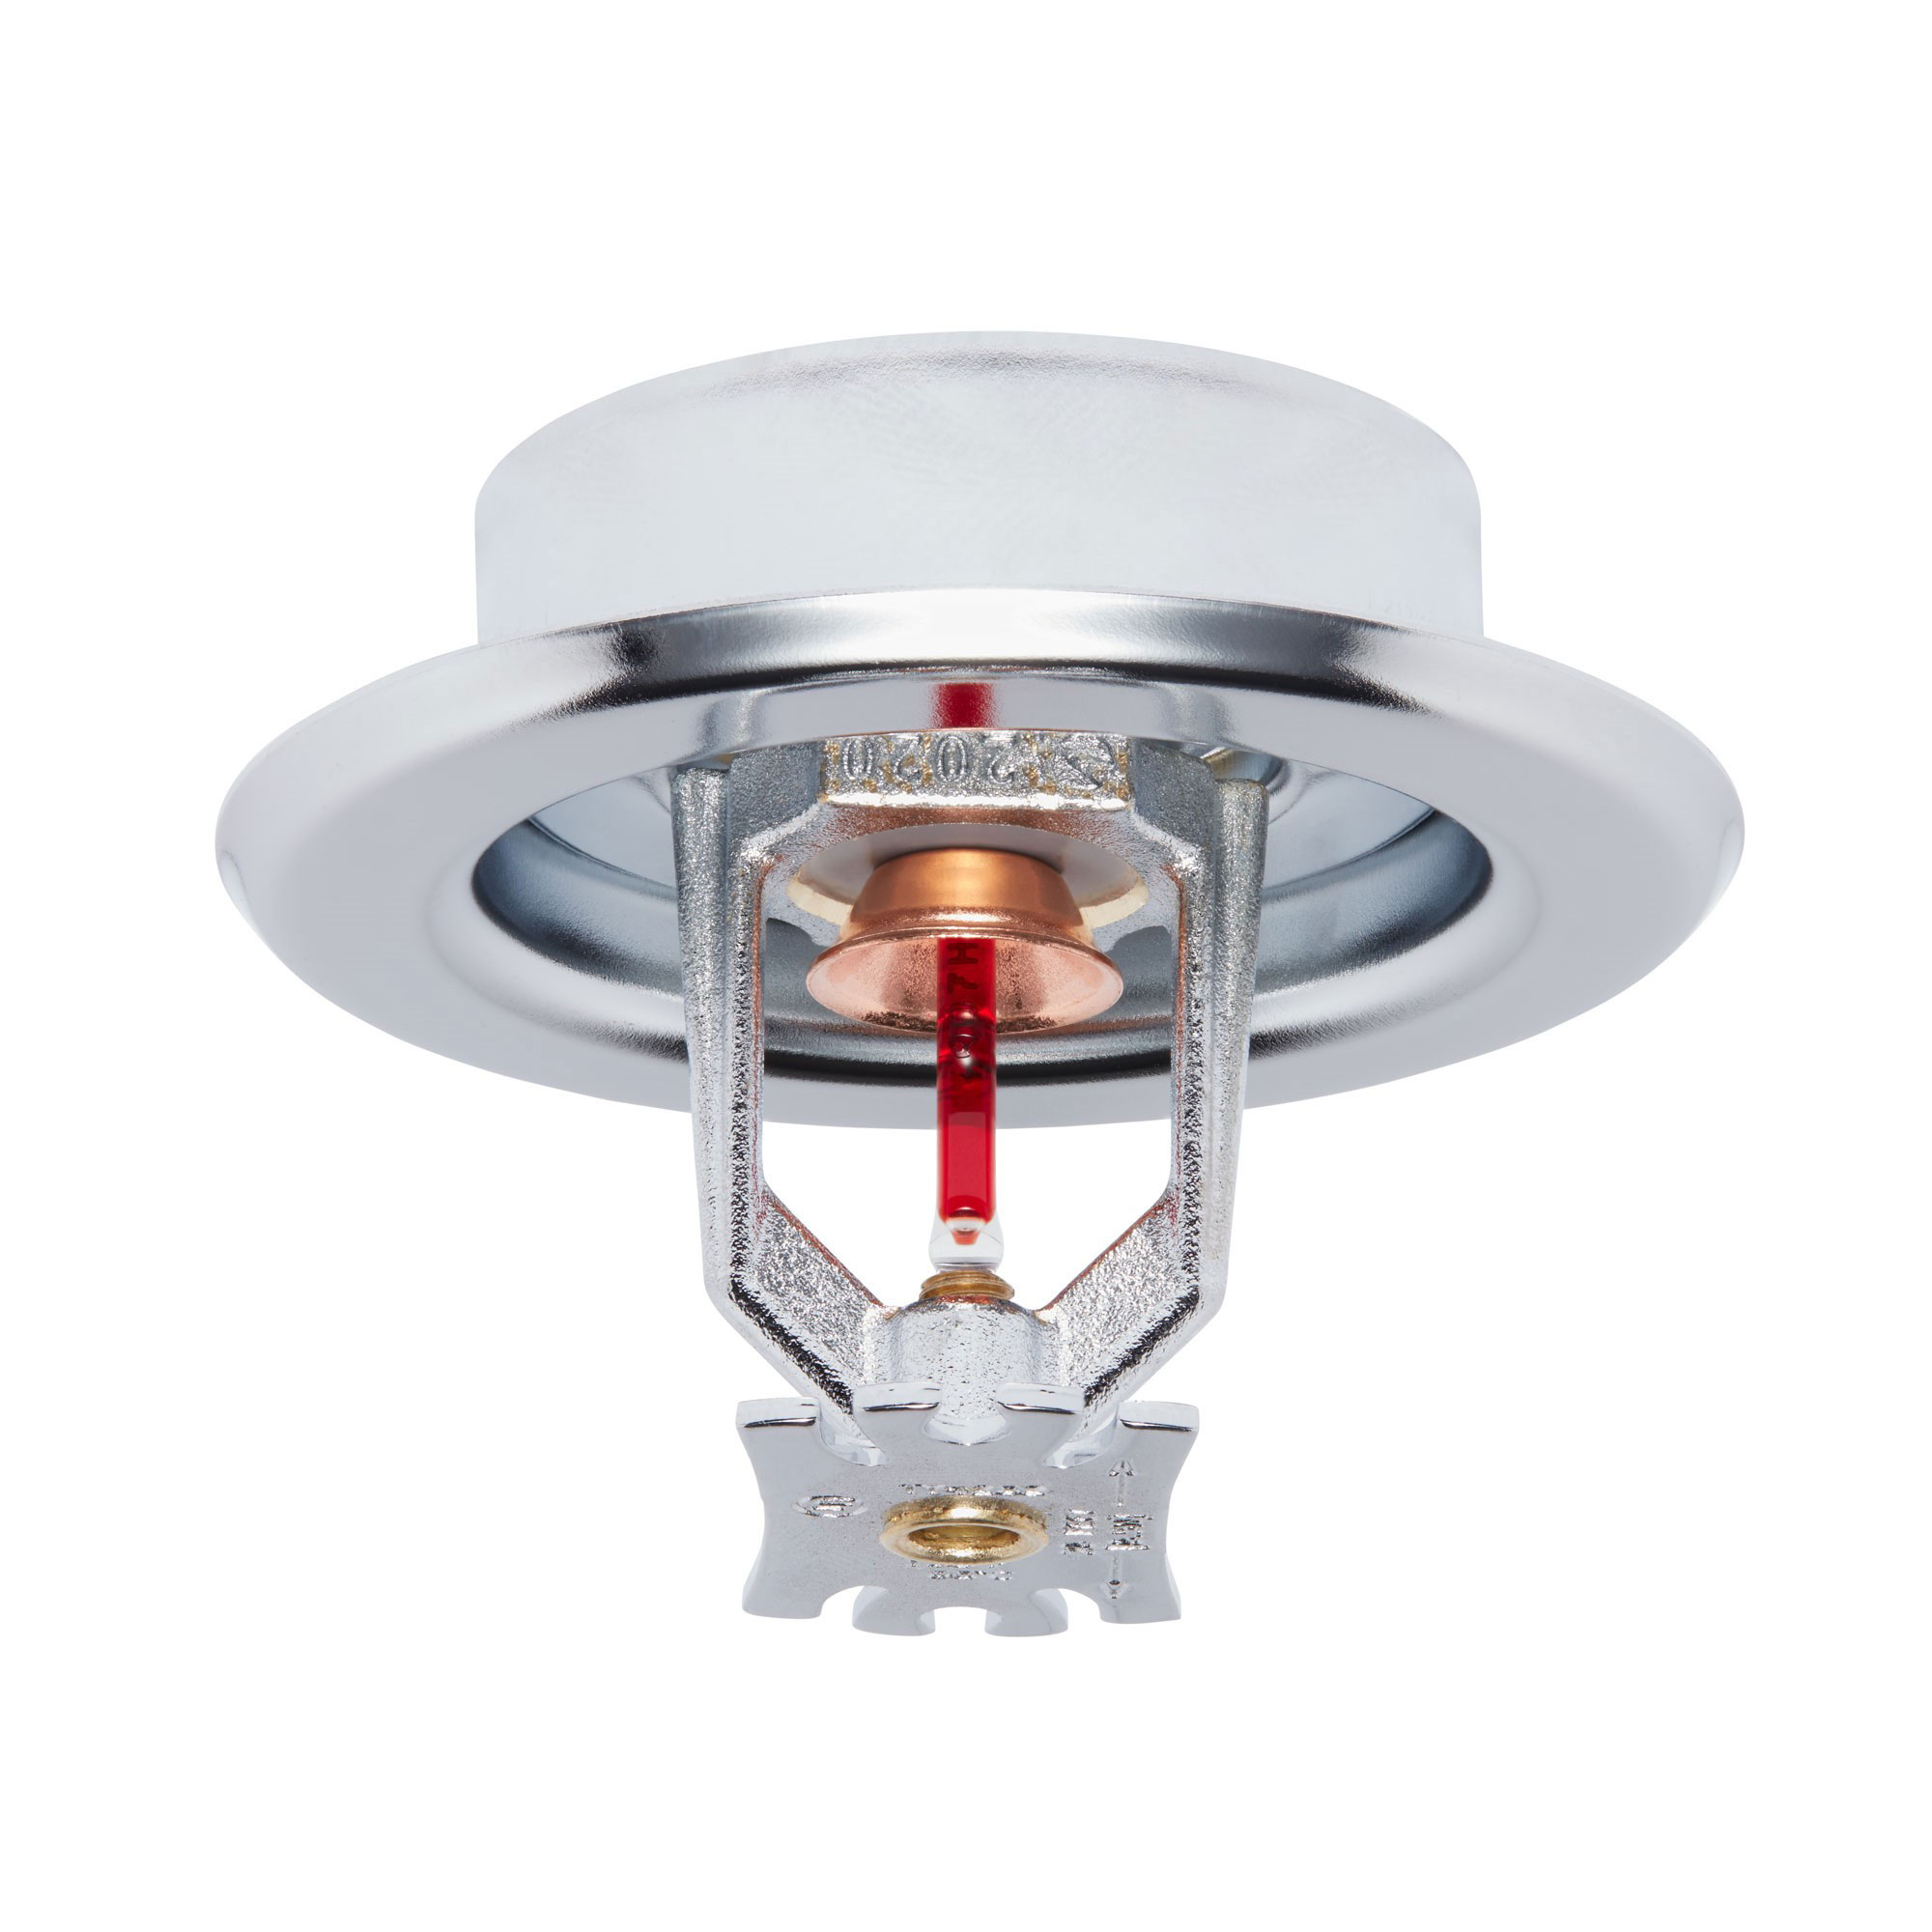 Brass Fire Safety Sprinkler - Premium Residential Valves and